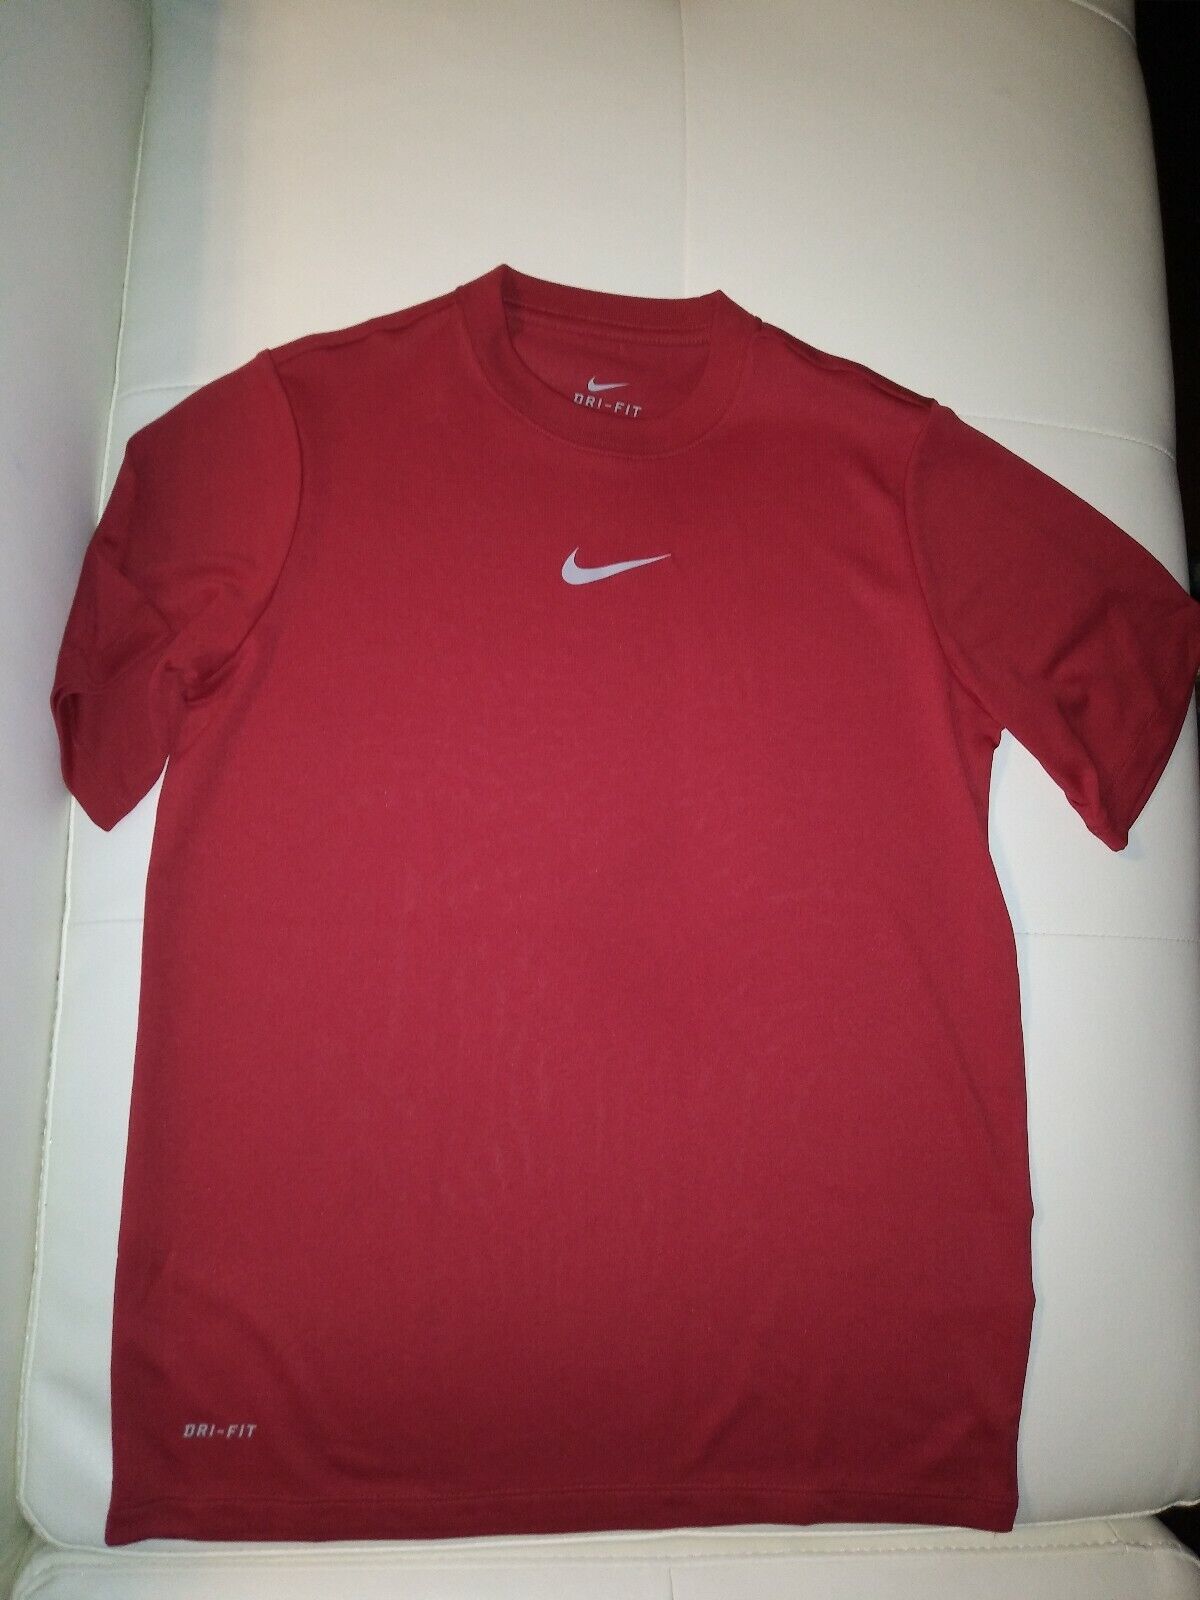 Primary image for Nike Boy's Dri-fit Athletic Shirt Sz Medium